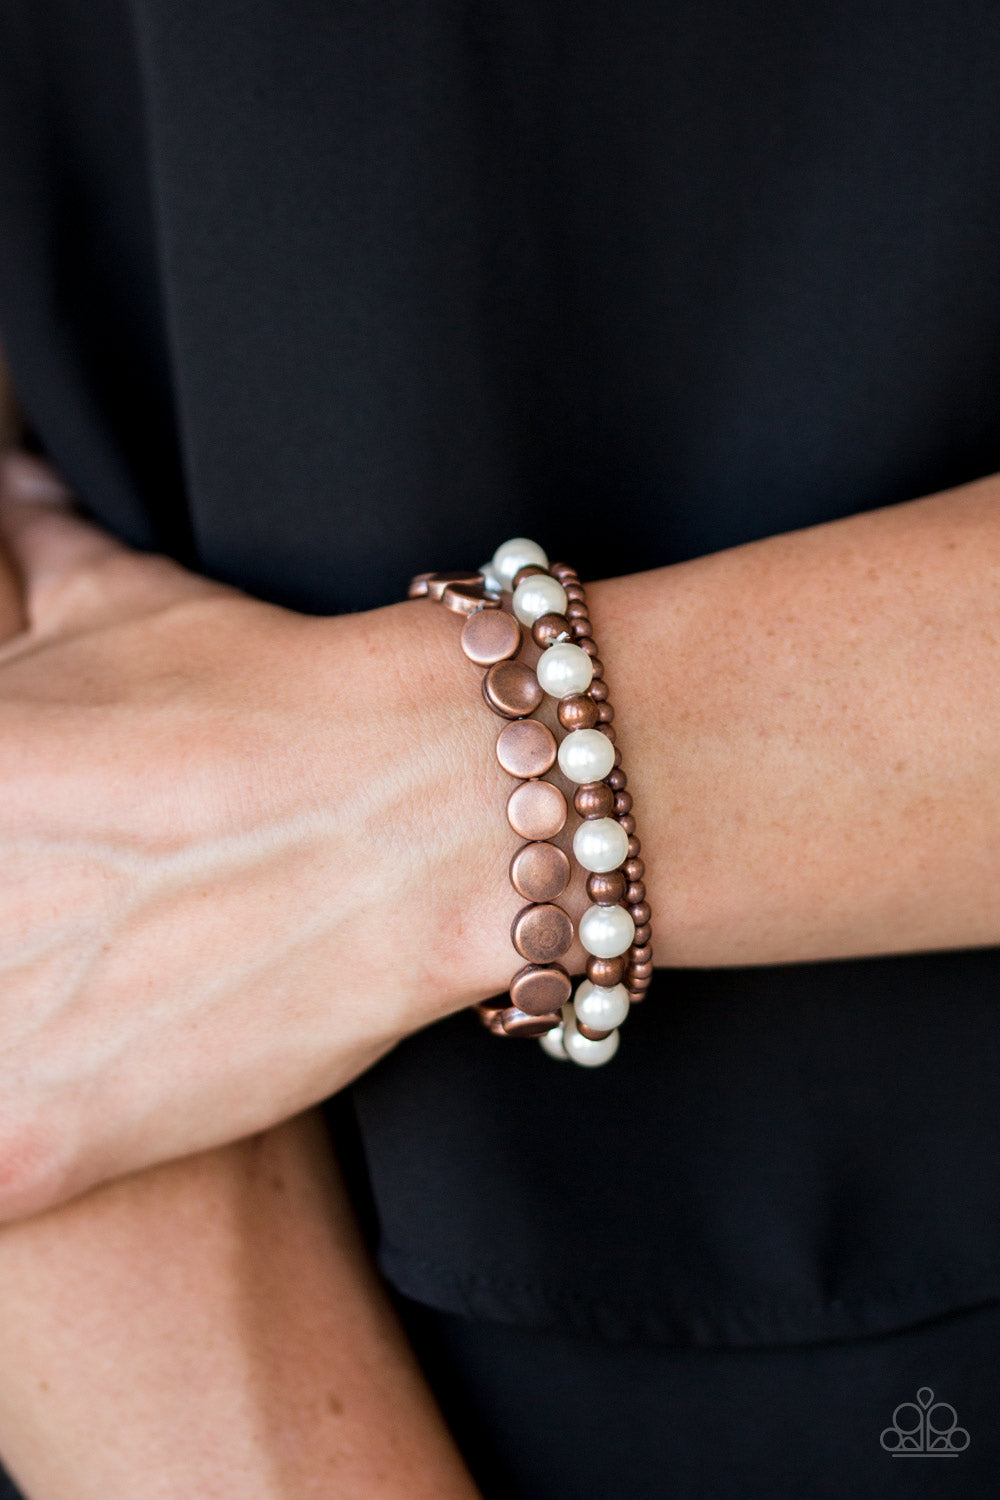 Paparazzi Bracelet ~ Girly Girl Glamour - Copper Bracelet with pearly white beads stretchy bracelet